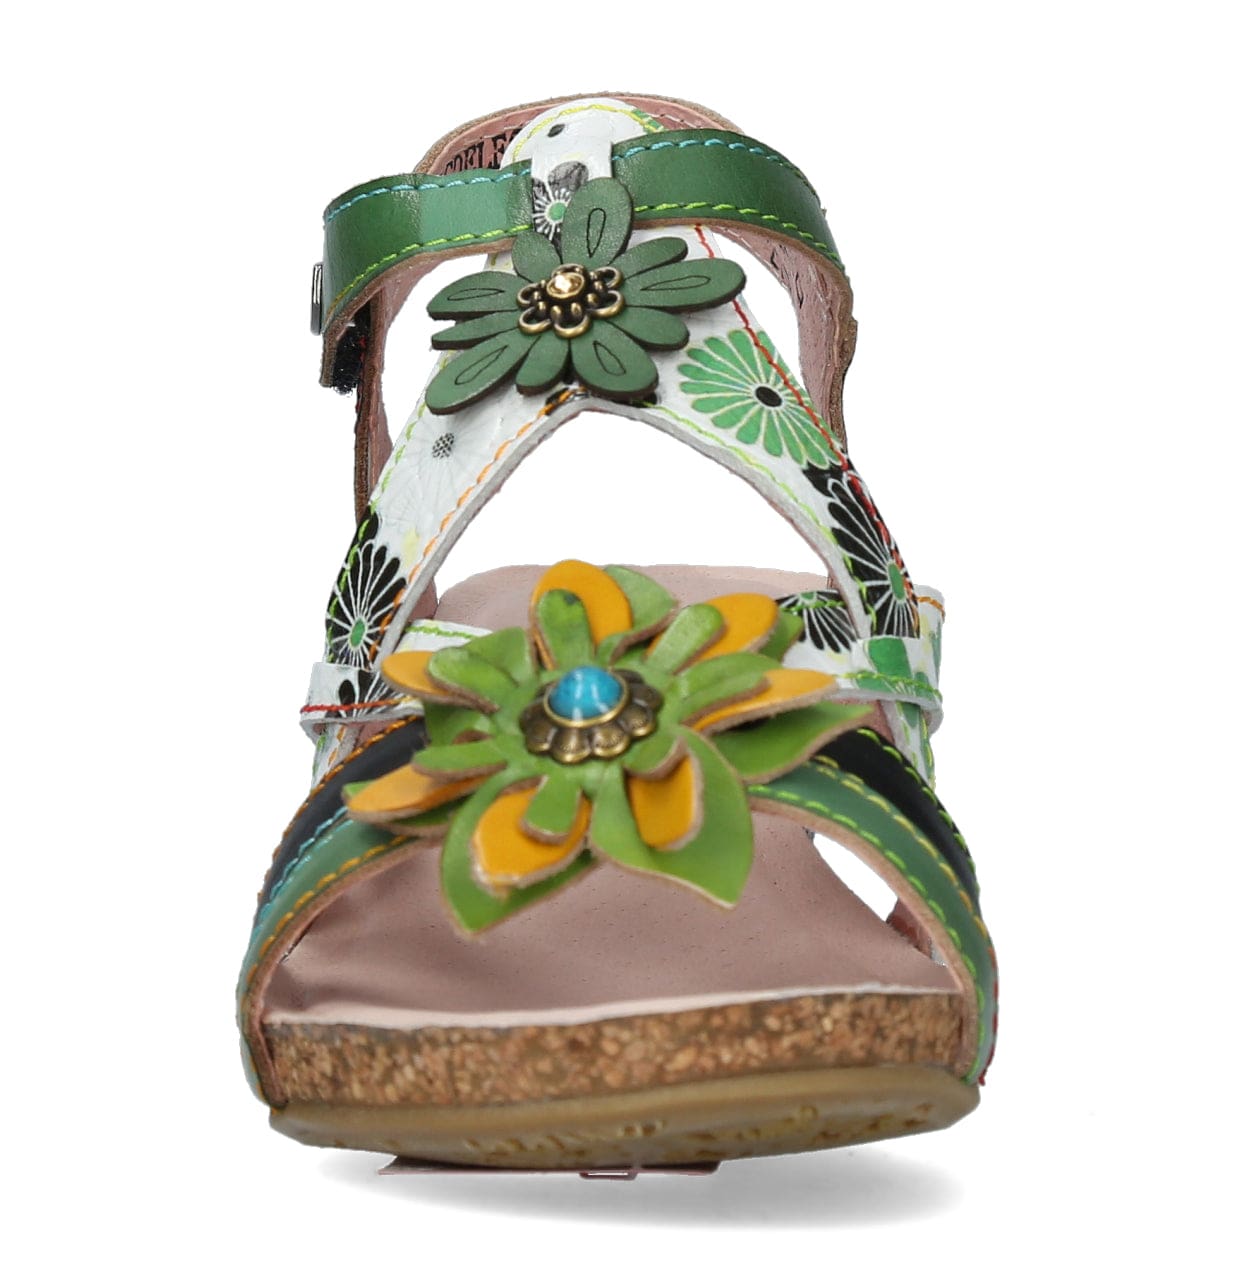 Chaussures JACDELEO 23 Fleur - Sandale